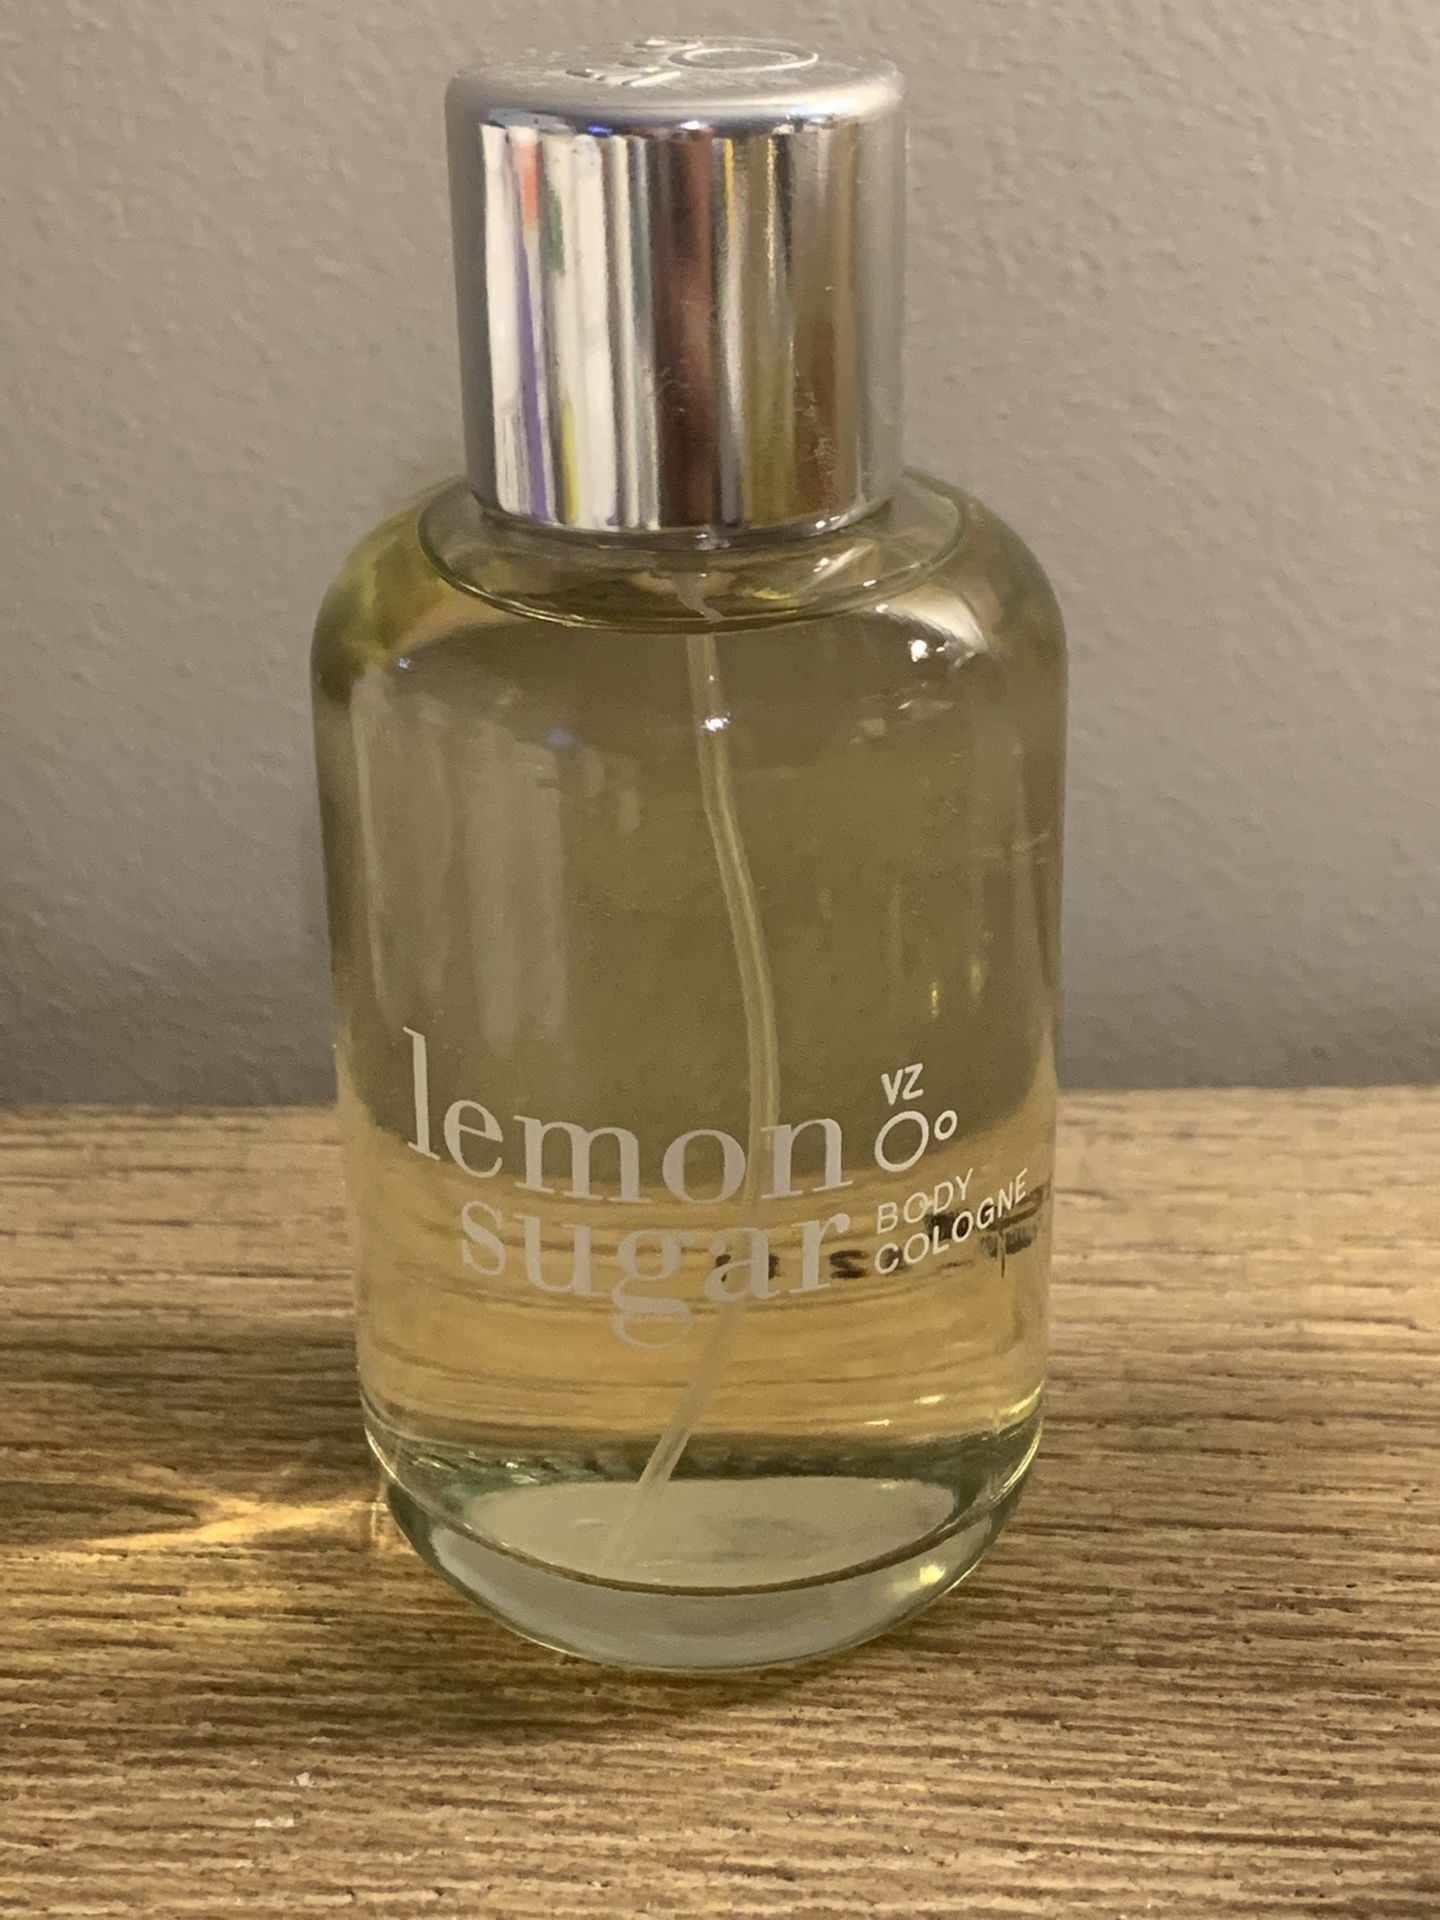 Lemon Sugar Fragrance Perfume Scent Body Bath & Body Cologne